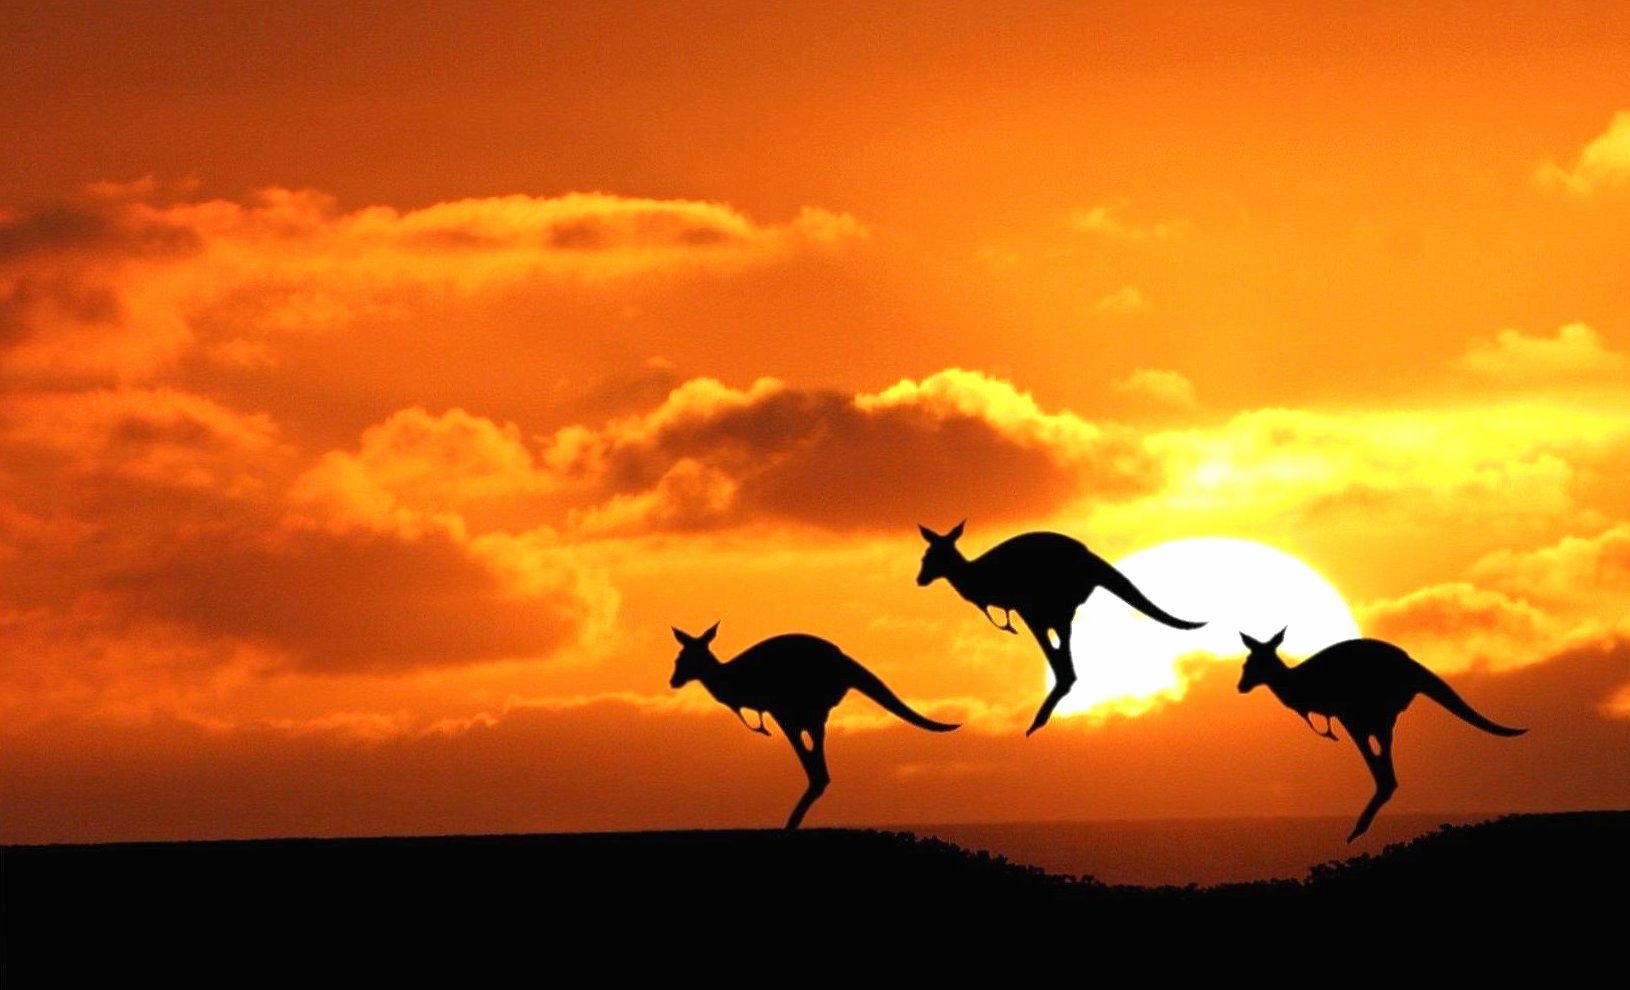 Sunset kangaroo at 1024 x 1024 iPad size wallpapers HD quality